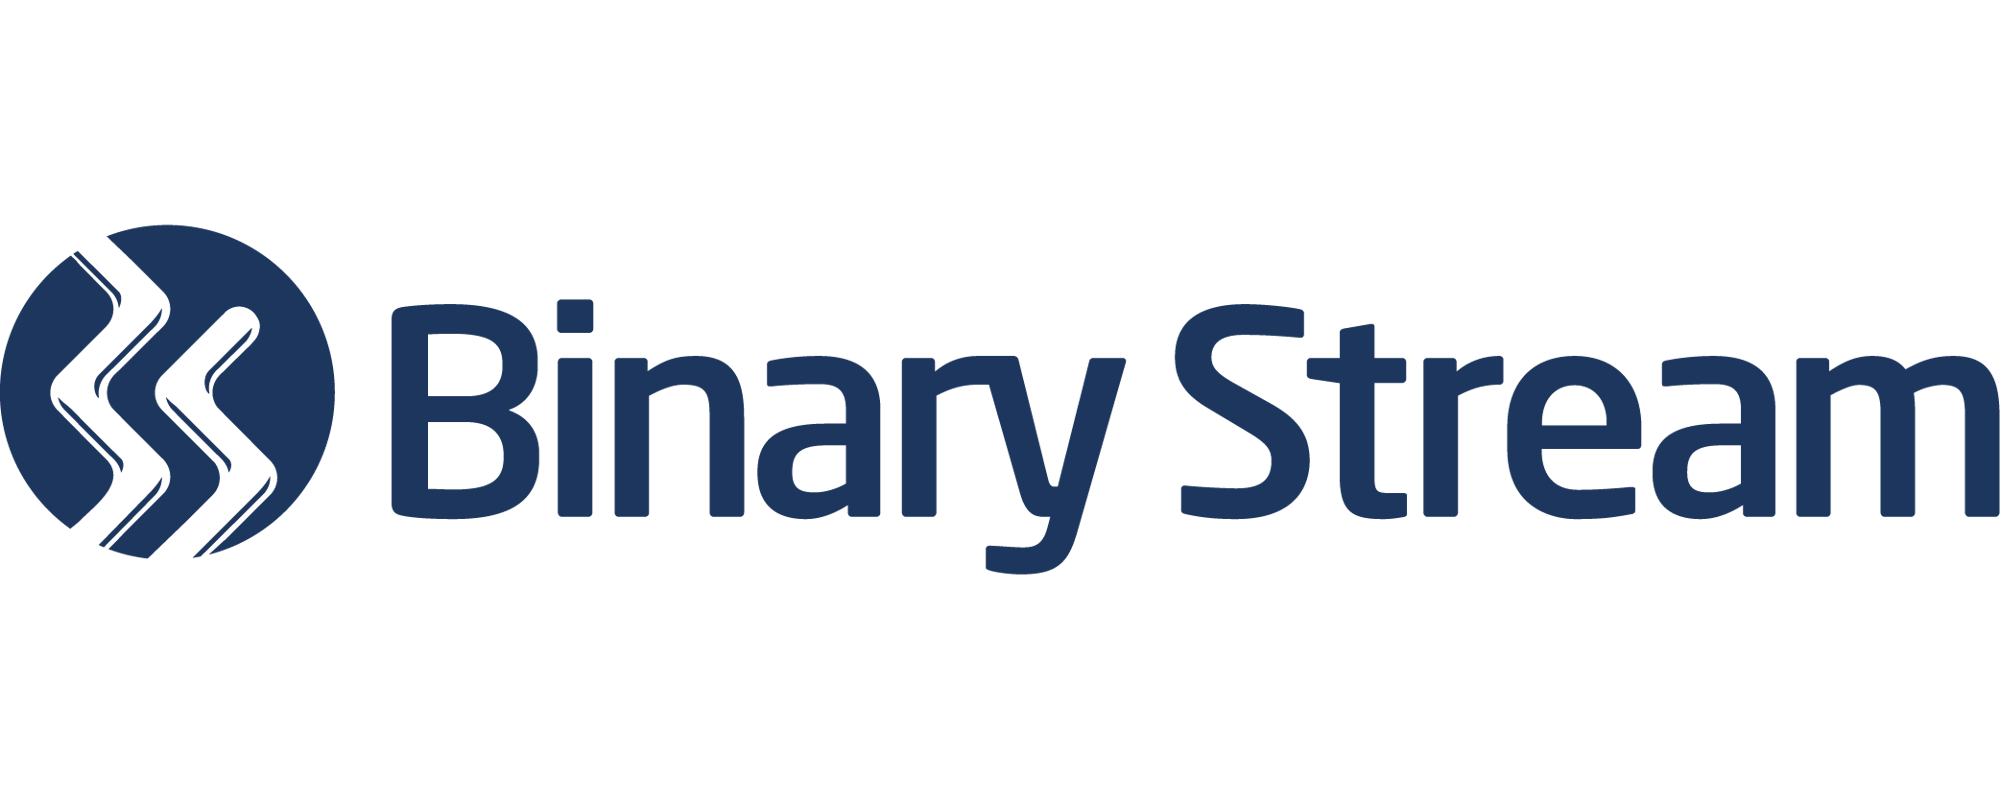 Binary Stream